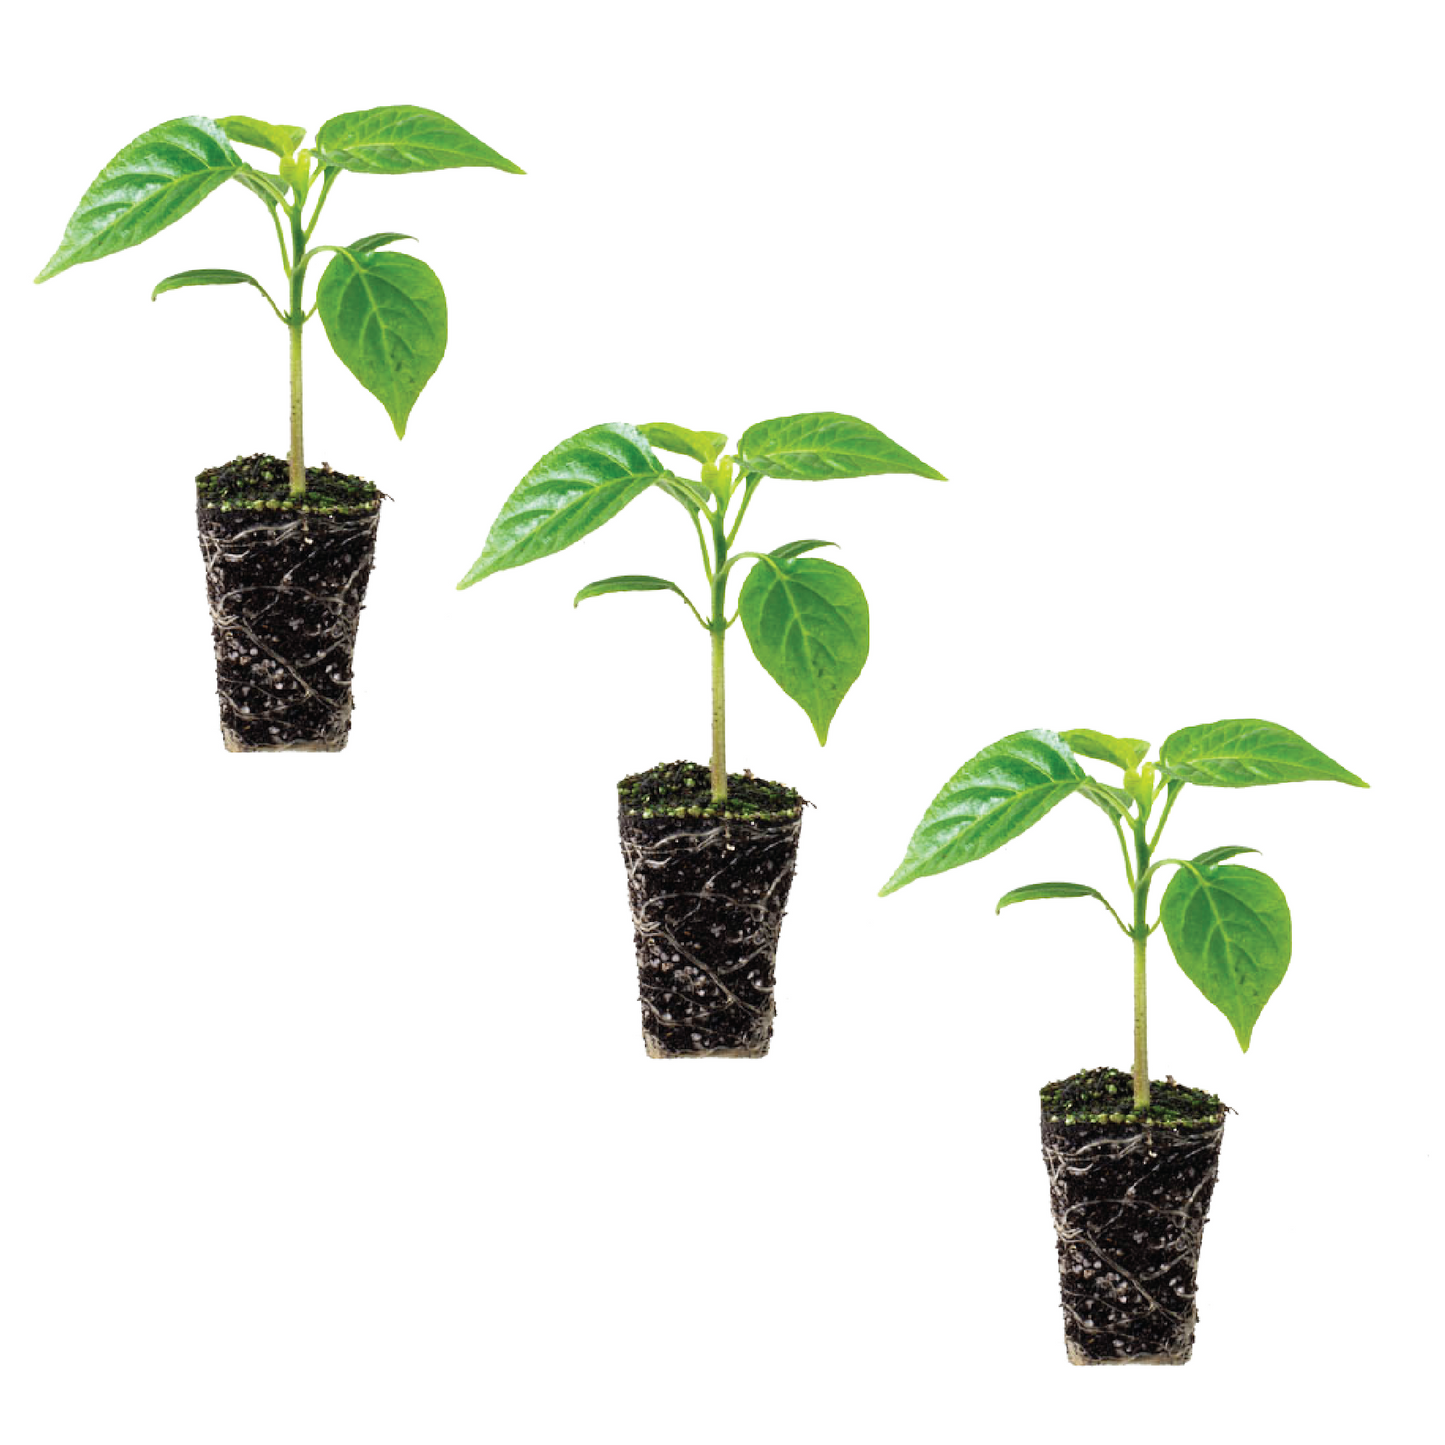 Pepper Sweet Banana Plantlings Live Baby Plants 1-3in., 3-Pack